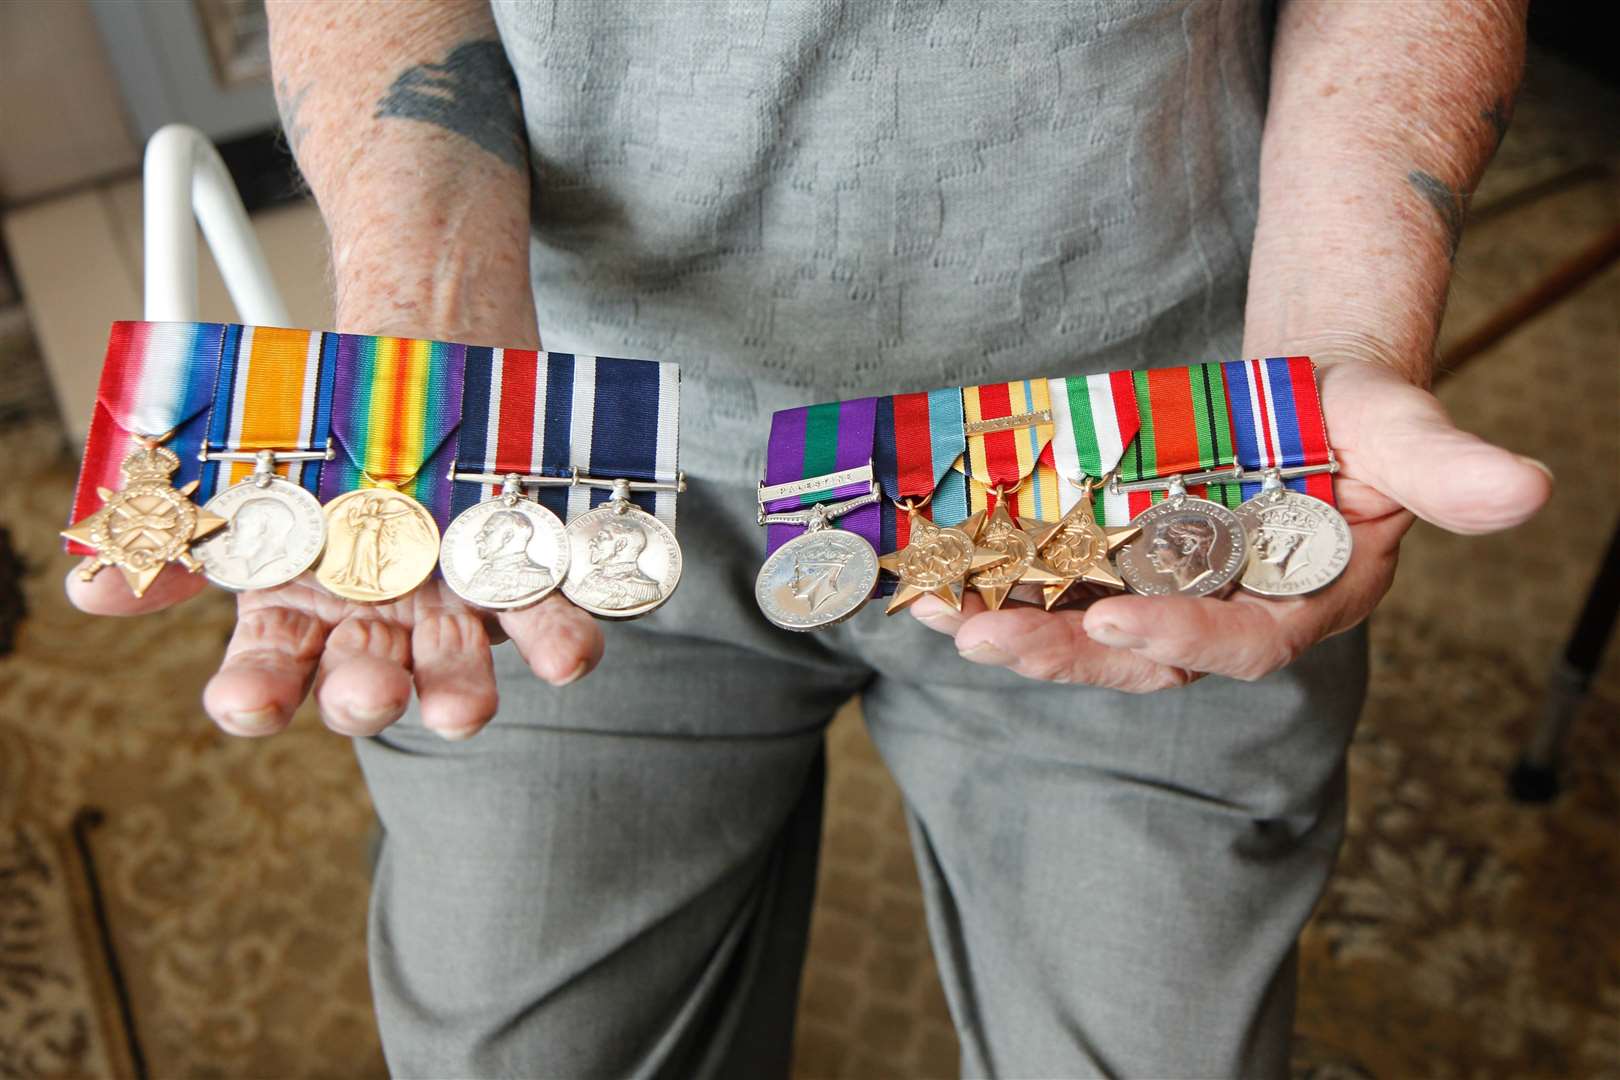 The medals that were stolen from Leslie Stelfox's home in Milton Regis